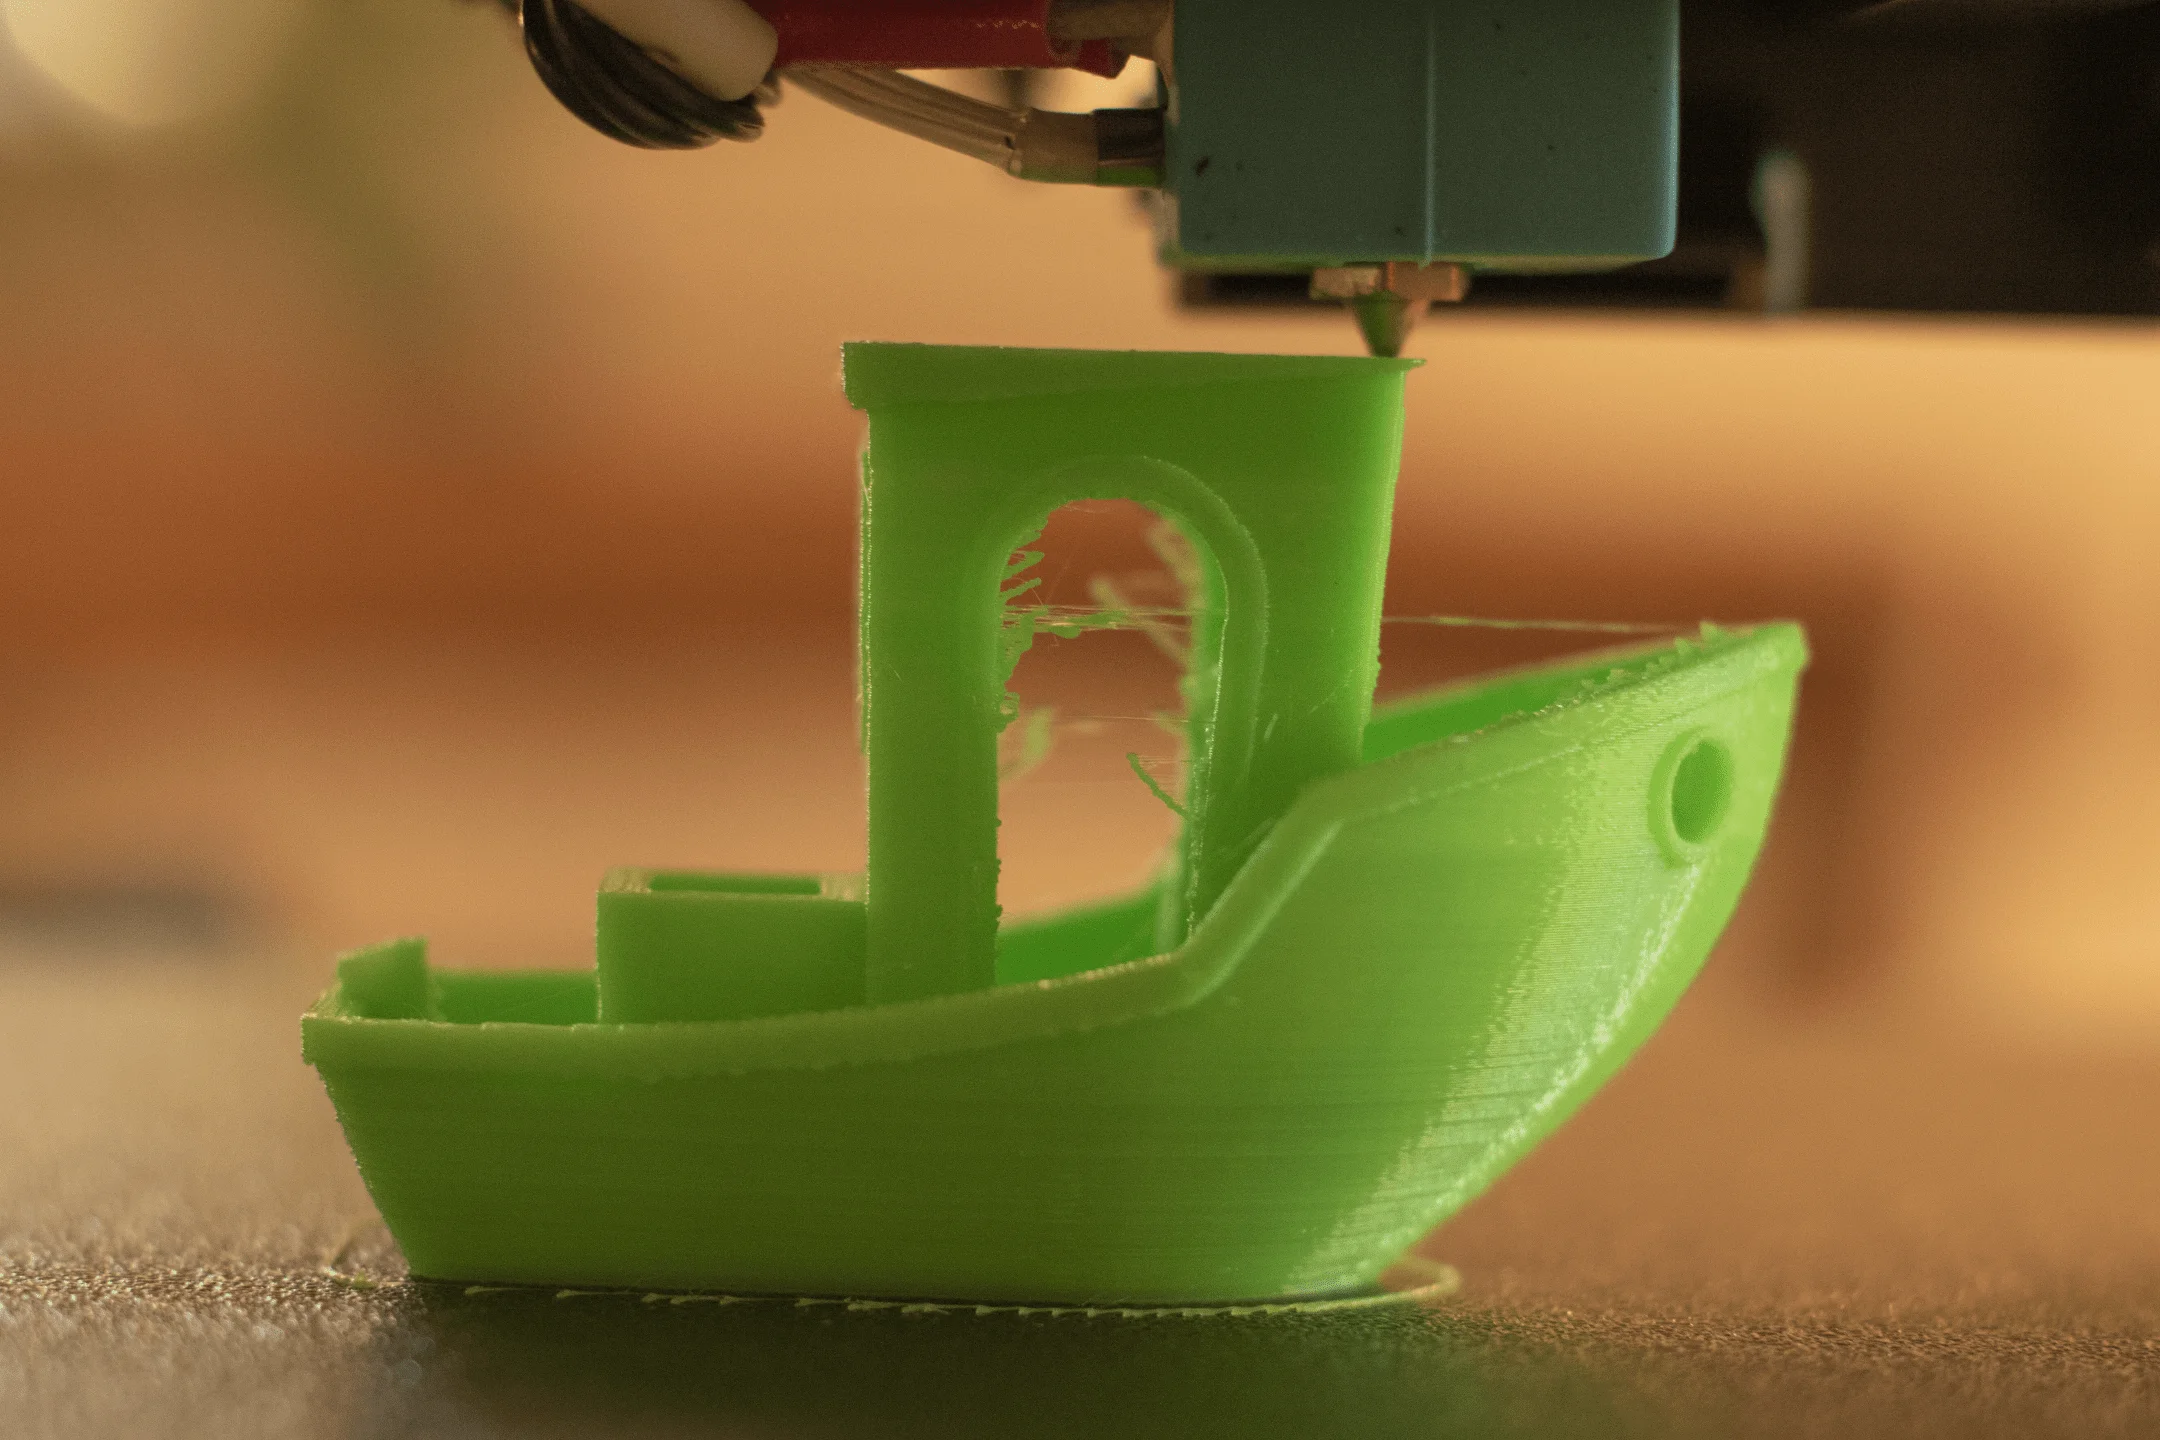 BenchyPrint - Anycubic Kobra 3D Printer Review - An affordable begginer friendly 3D printer